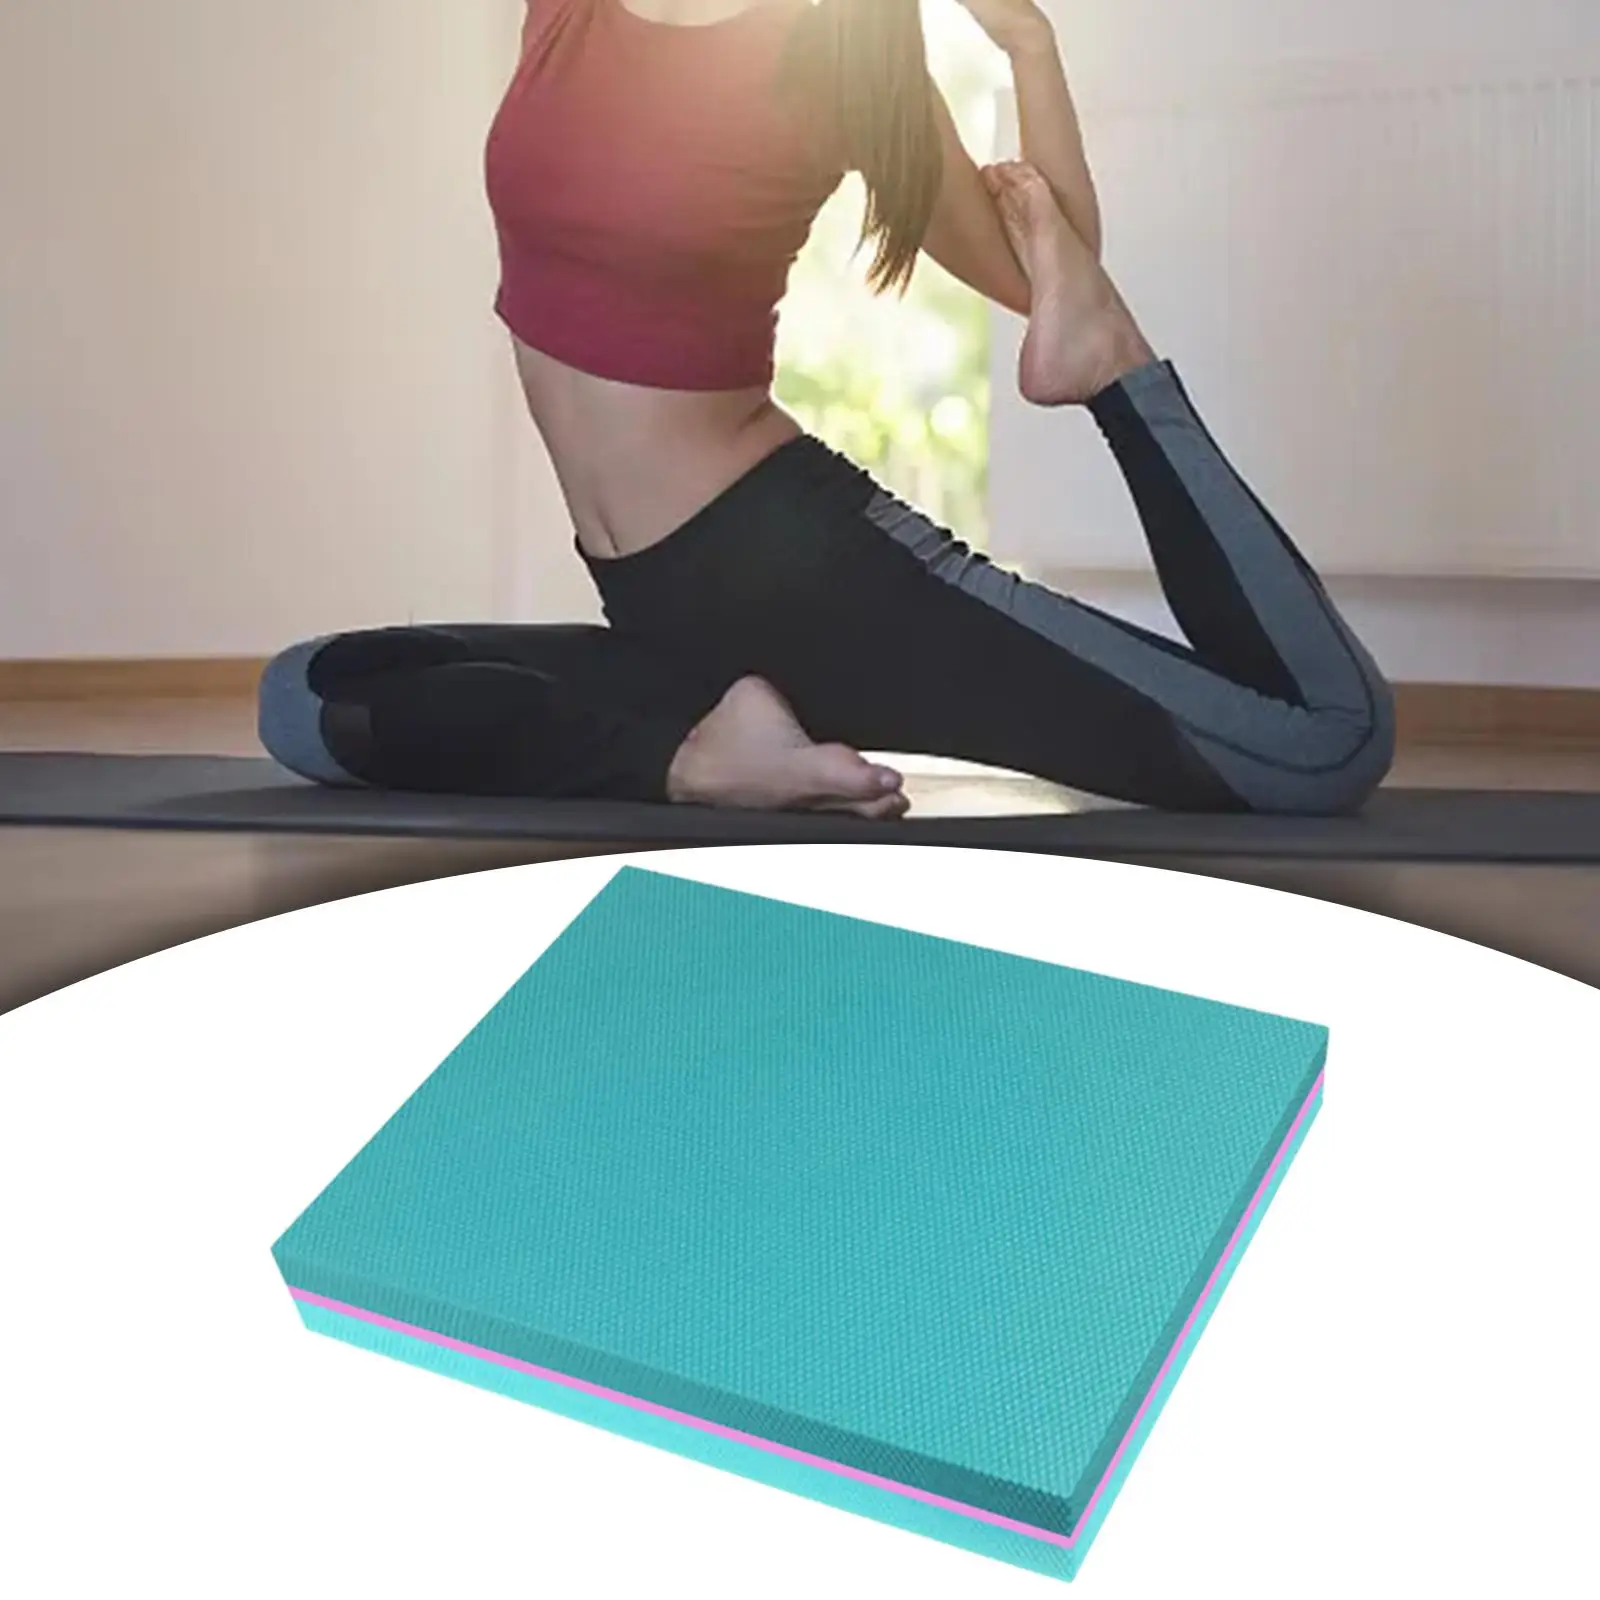 Exercise Balance Pad Pilates Trainer Thick Yoga Mat for Balancing Meditation Strength Stability Training Rehabilitation Workout